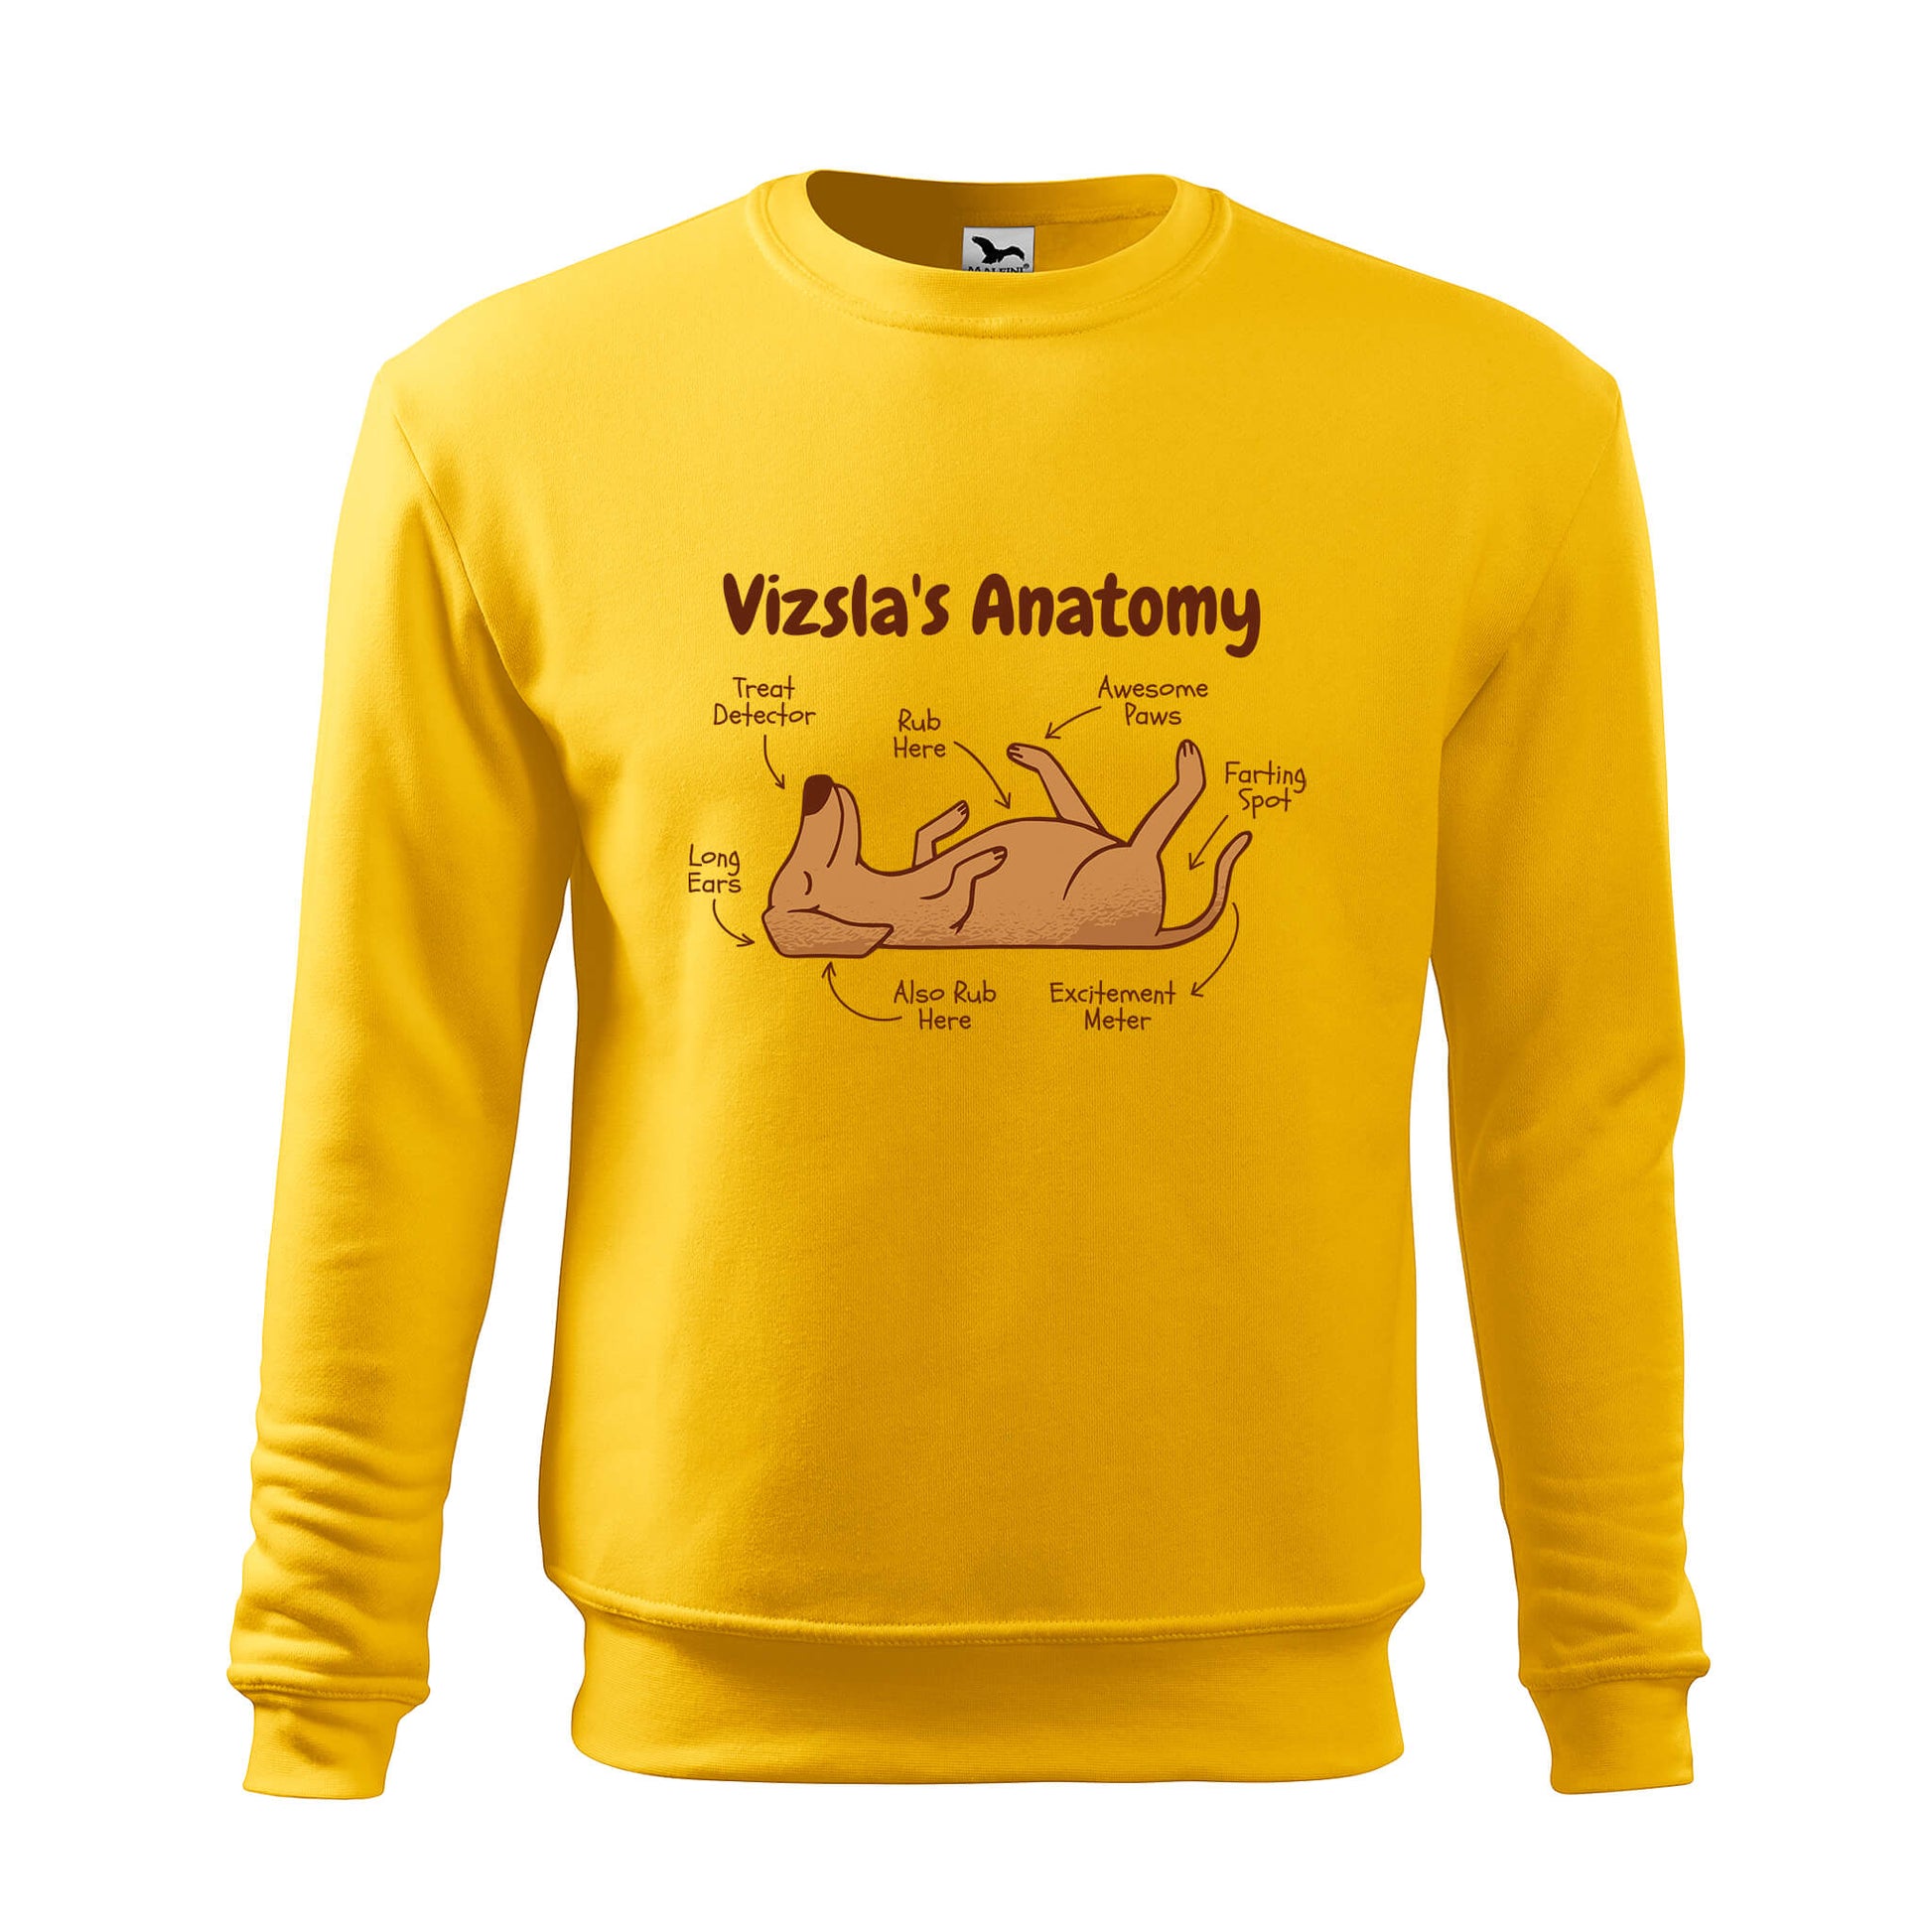 Anatomy of vizsla sweatshirt - rvdesignprint